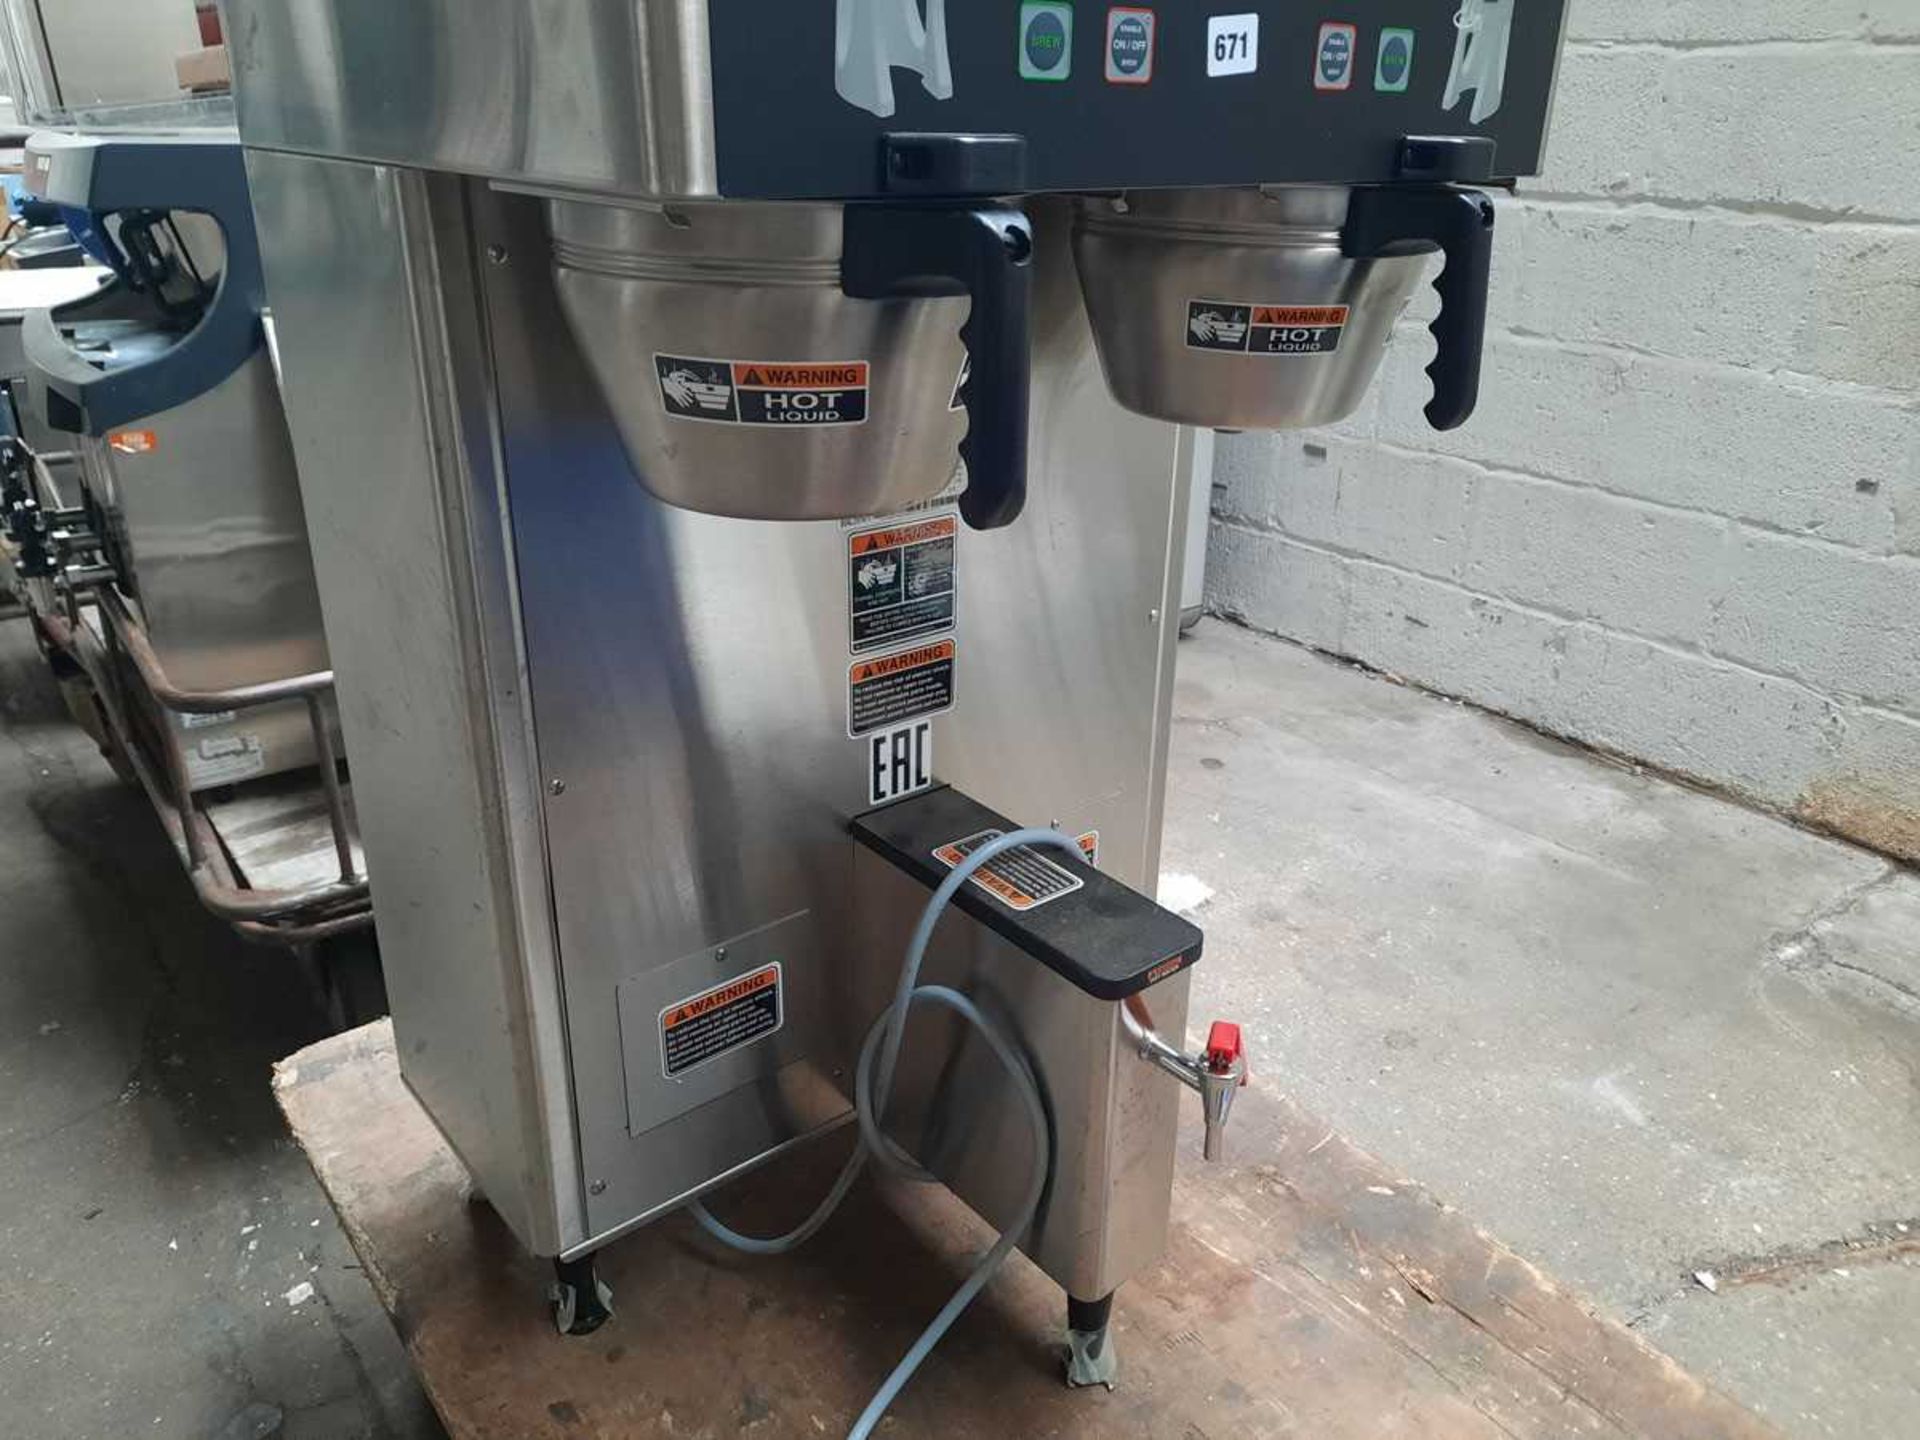 55cm Bunn digital coffee brewer, commercial coffee machine - Image 2 of 2